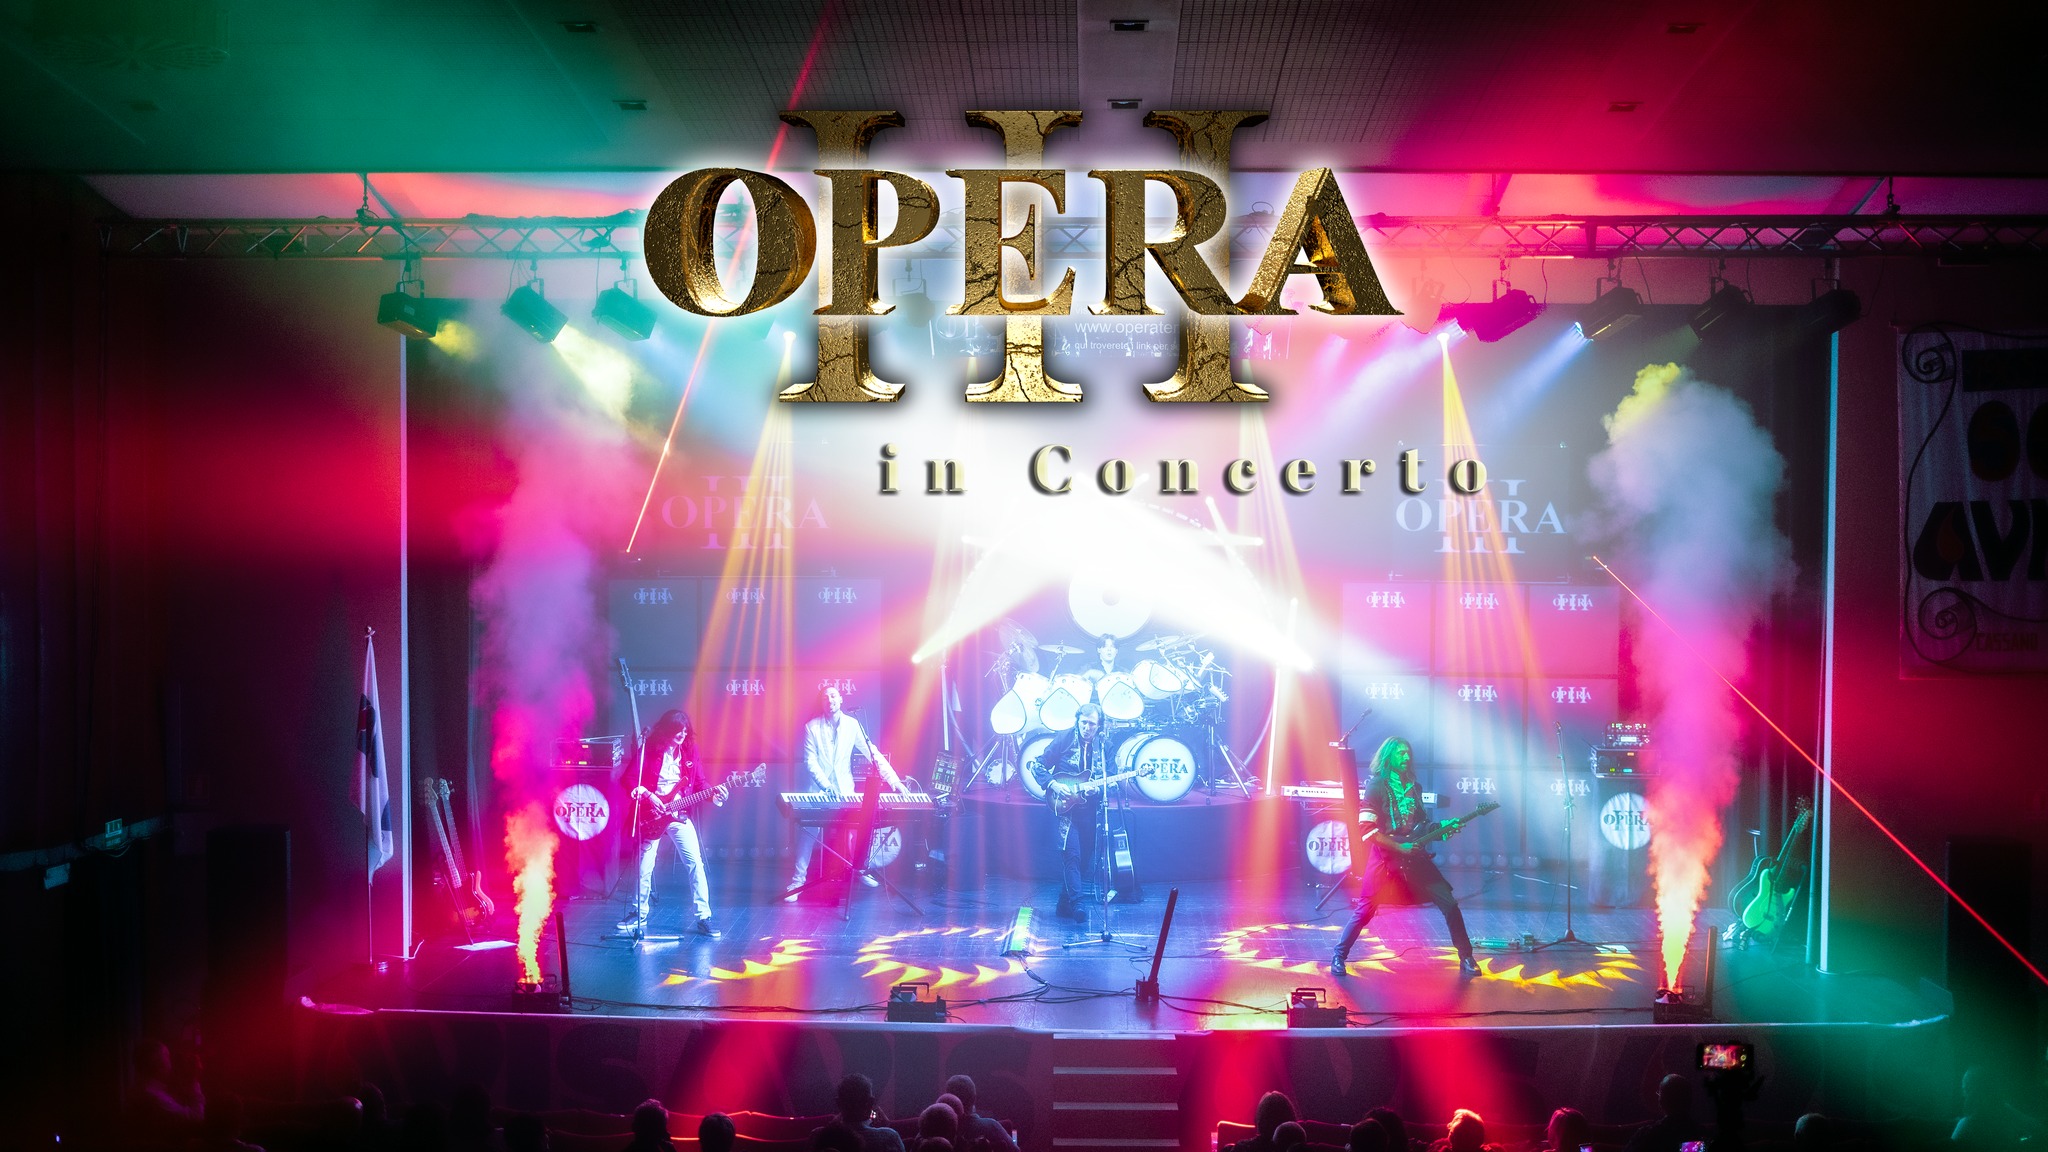 Opera III in Concerto @ Latronico